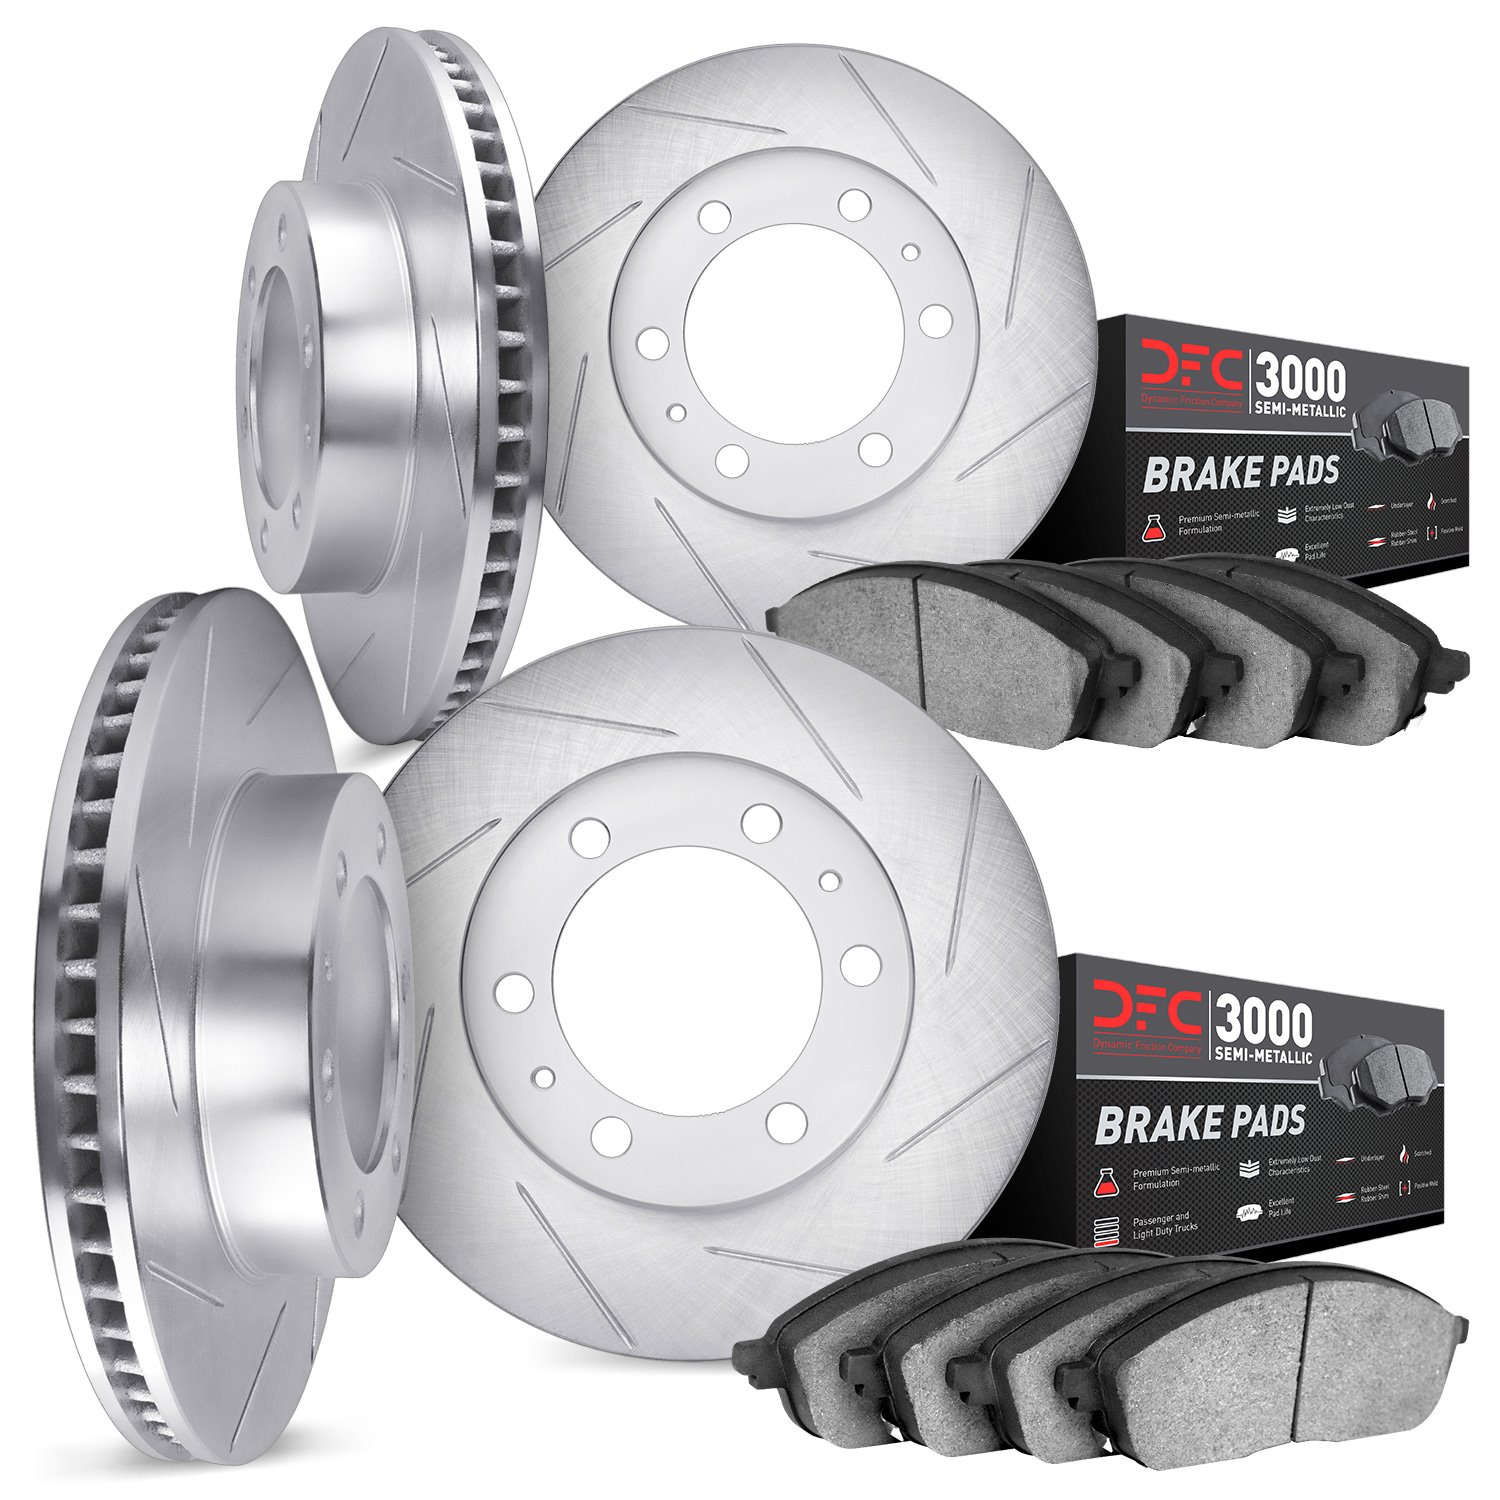 5114-48033 Slotted Brake Rotors with 3000-Series Semi-Metallic Brake Pads Kit & Hardware [Silver], 2009-2014 GM, Position: Front